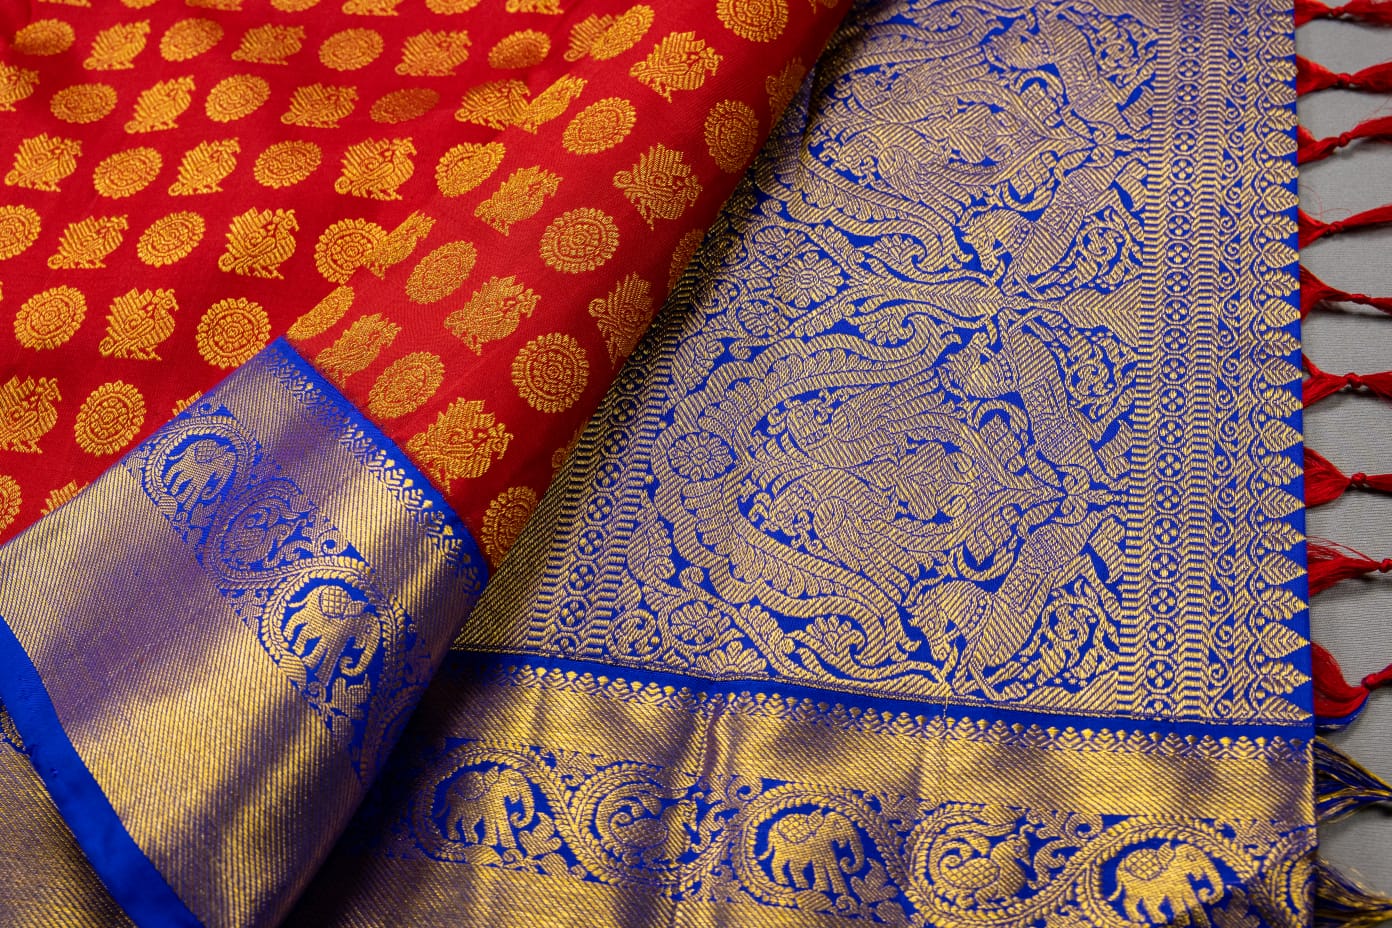 Pure silk handloom kanchipuram saree in red with royal blue saree